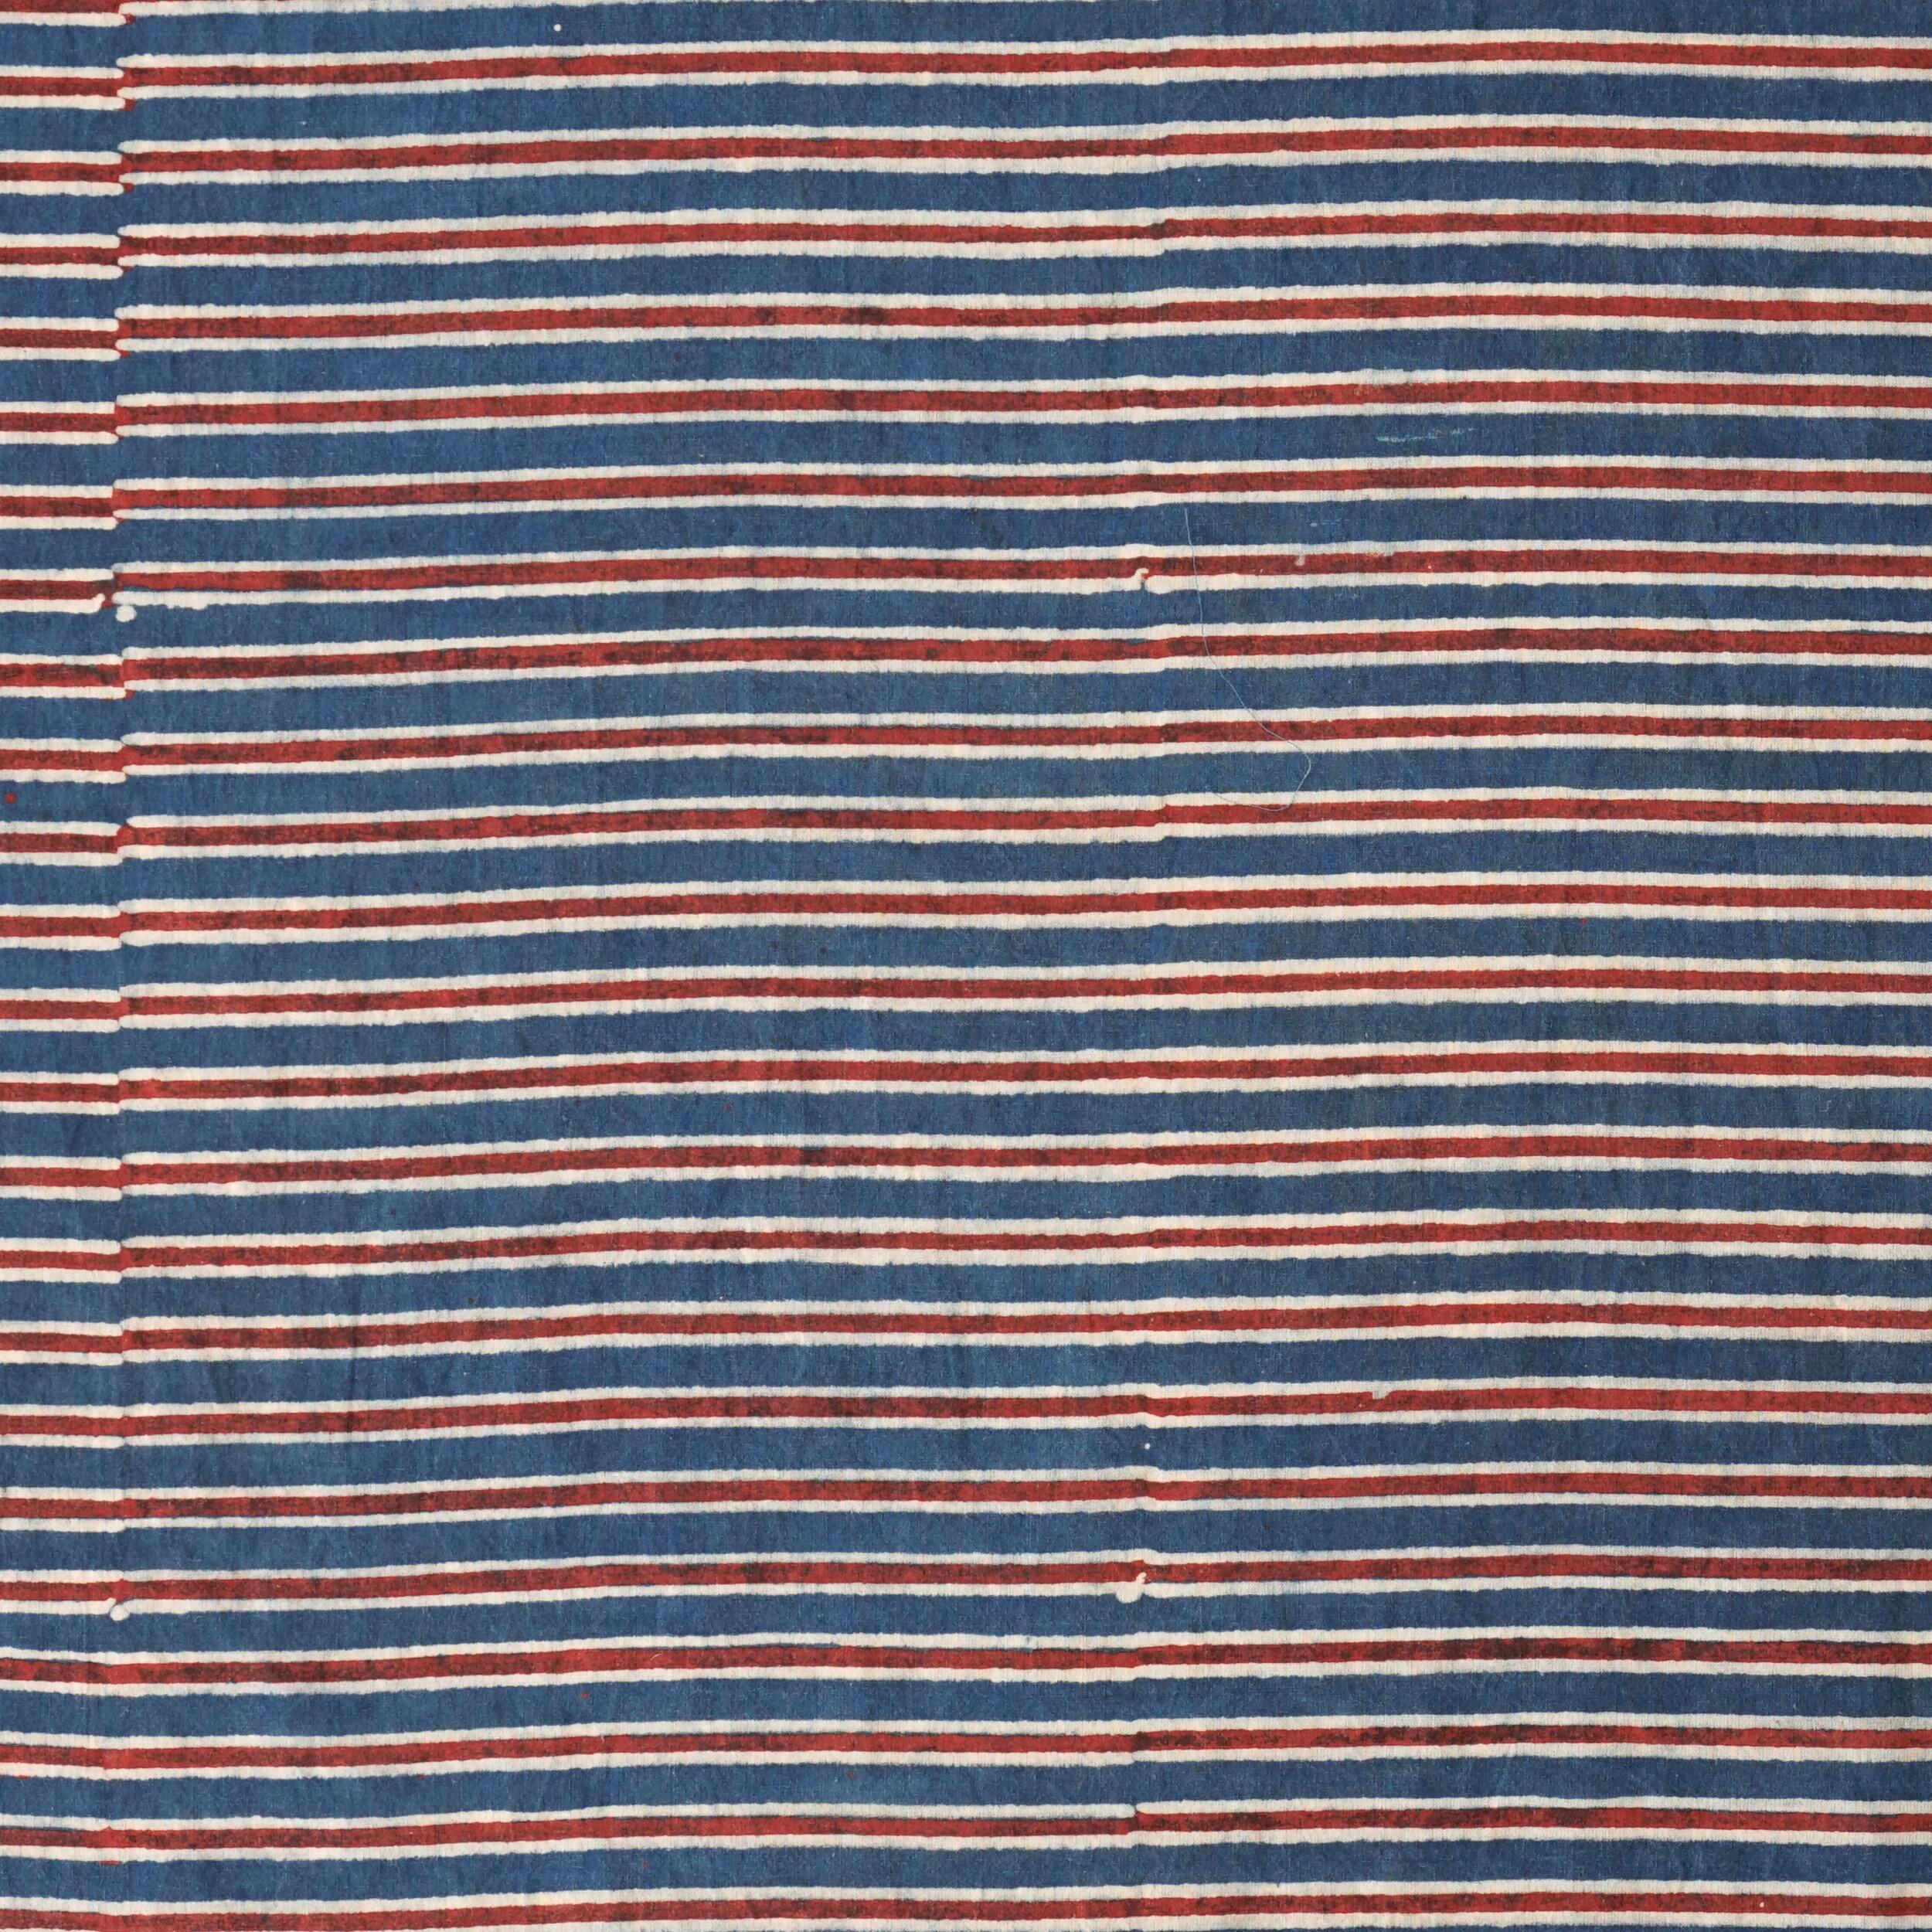 3 - SIK57 - Hand Block-Printed Cotton - Lines Design - Red Alizarin, Indigo Blue, Black Dyes - Flat